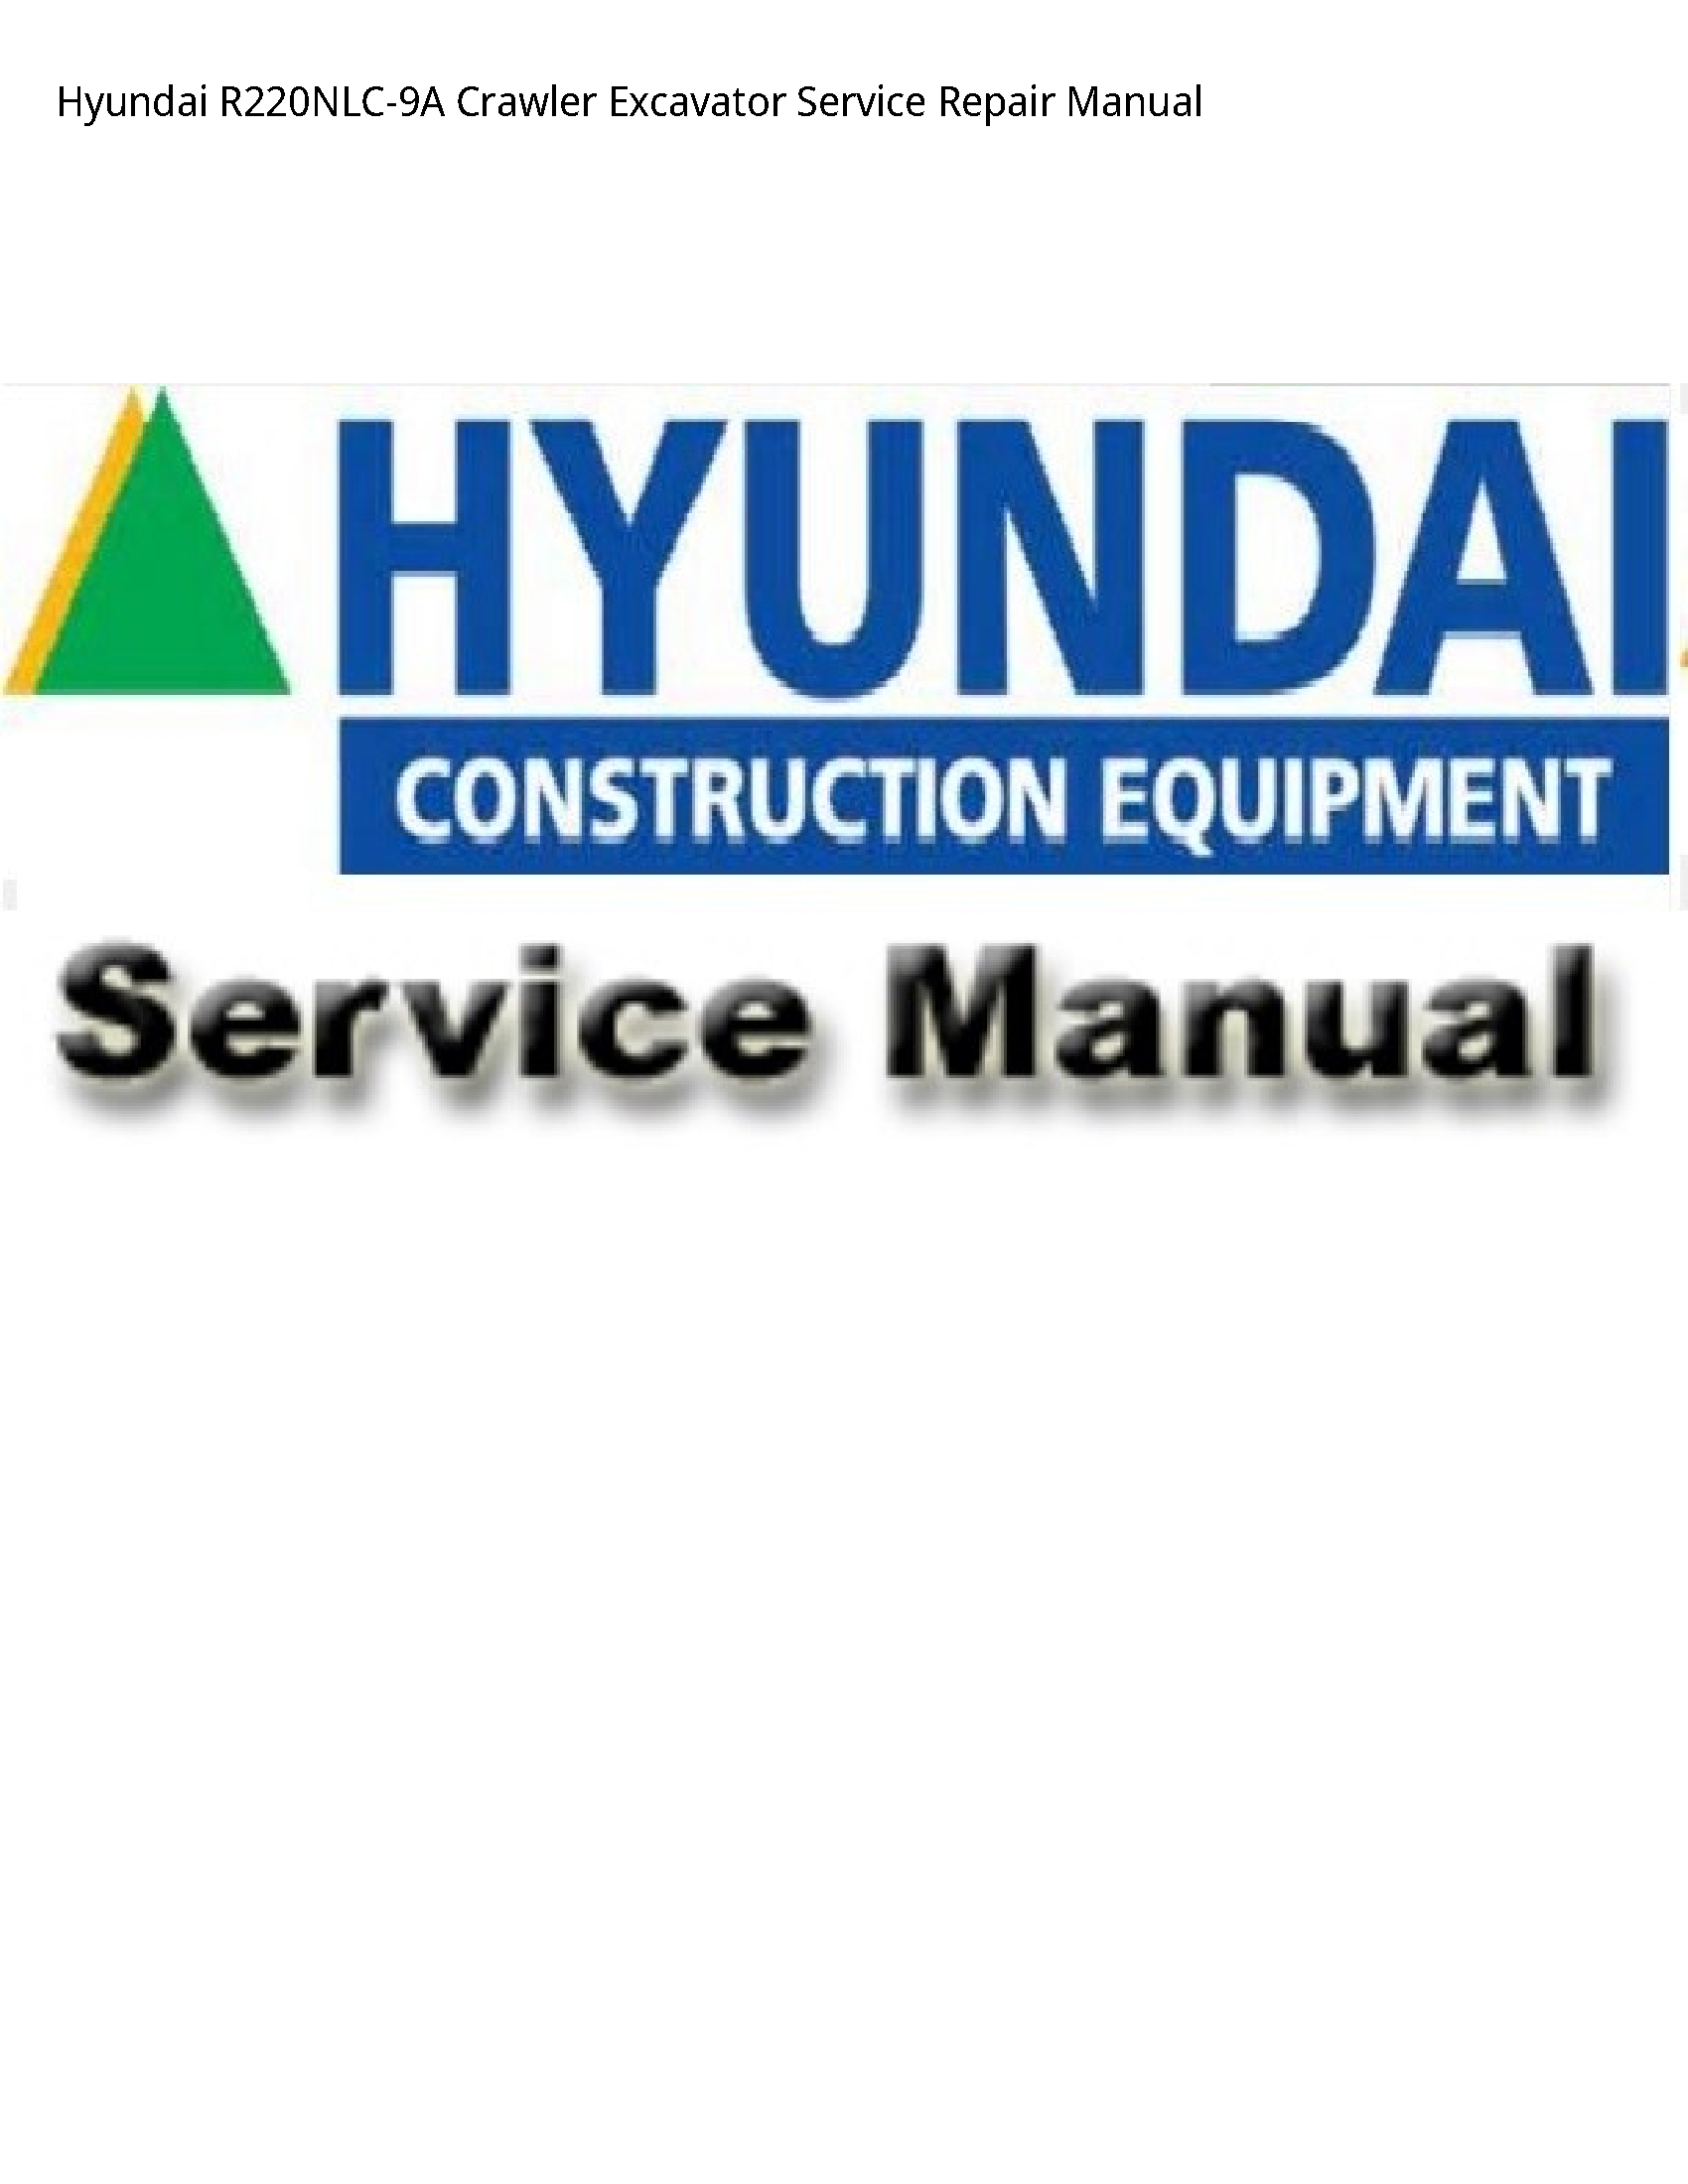 Hyundai R220NLC-9A Crawler Excavator manual